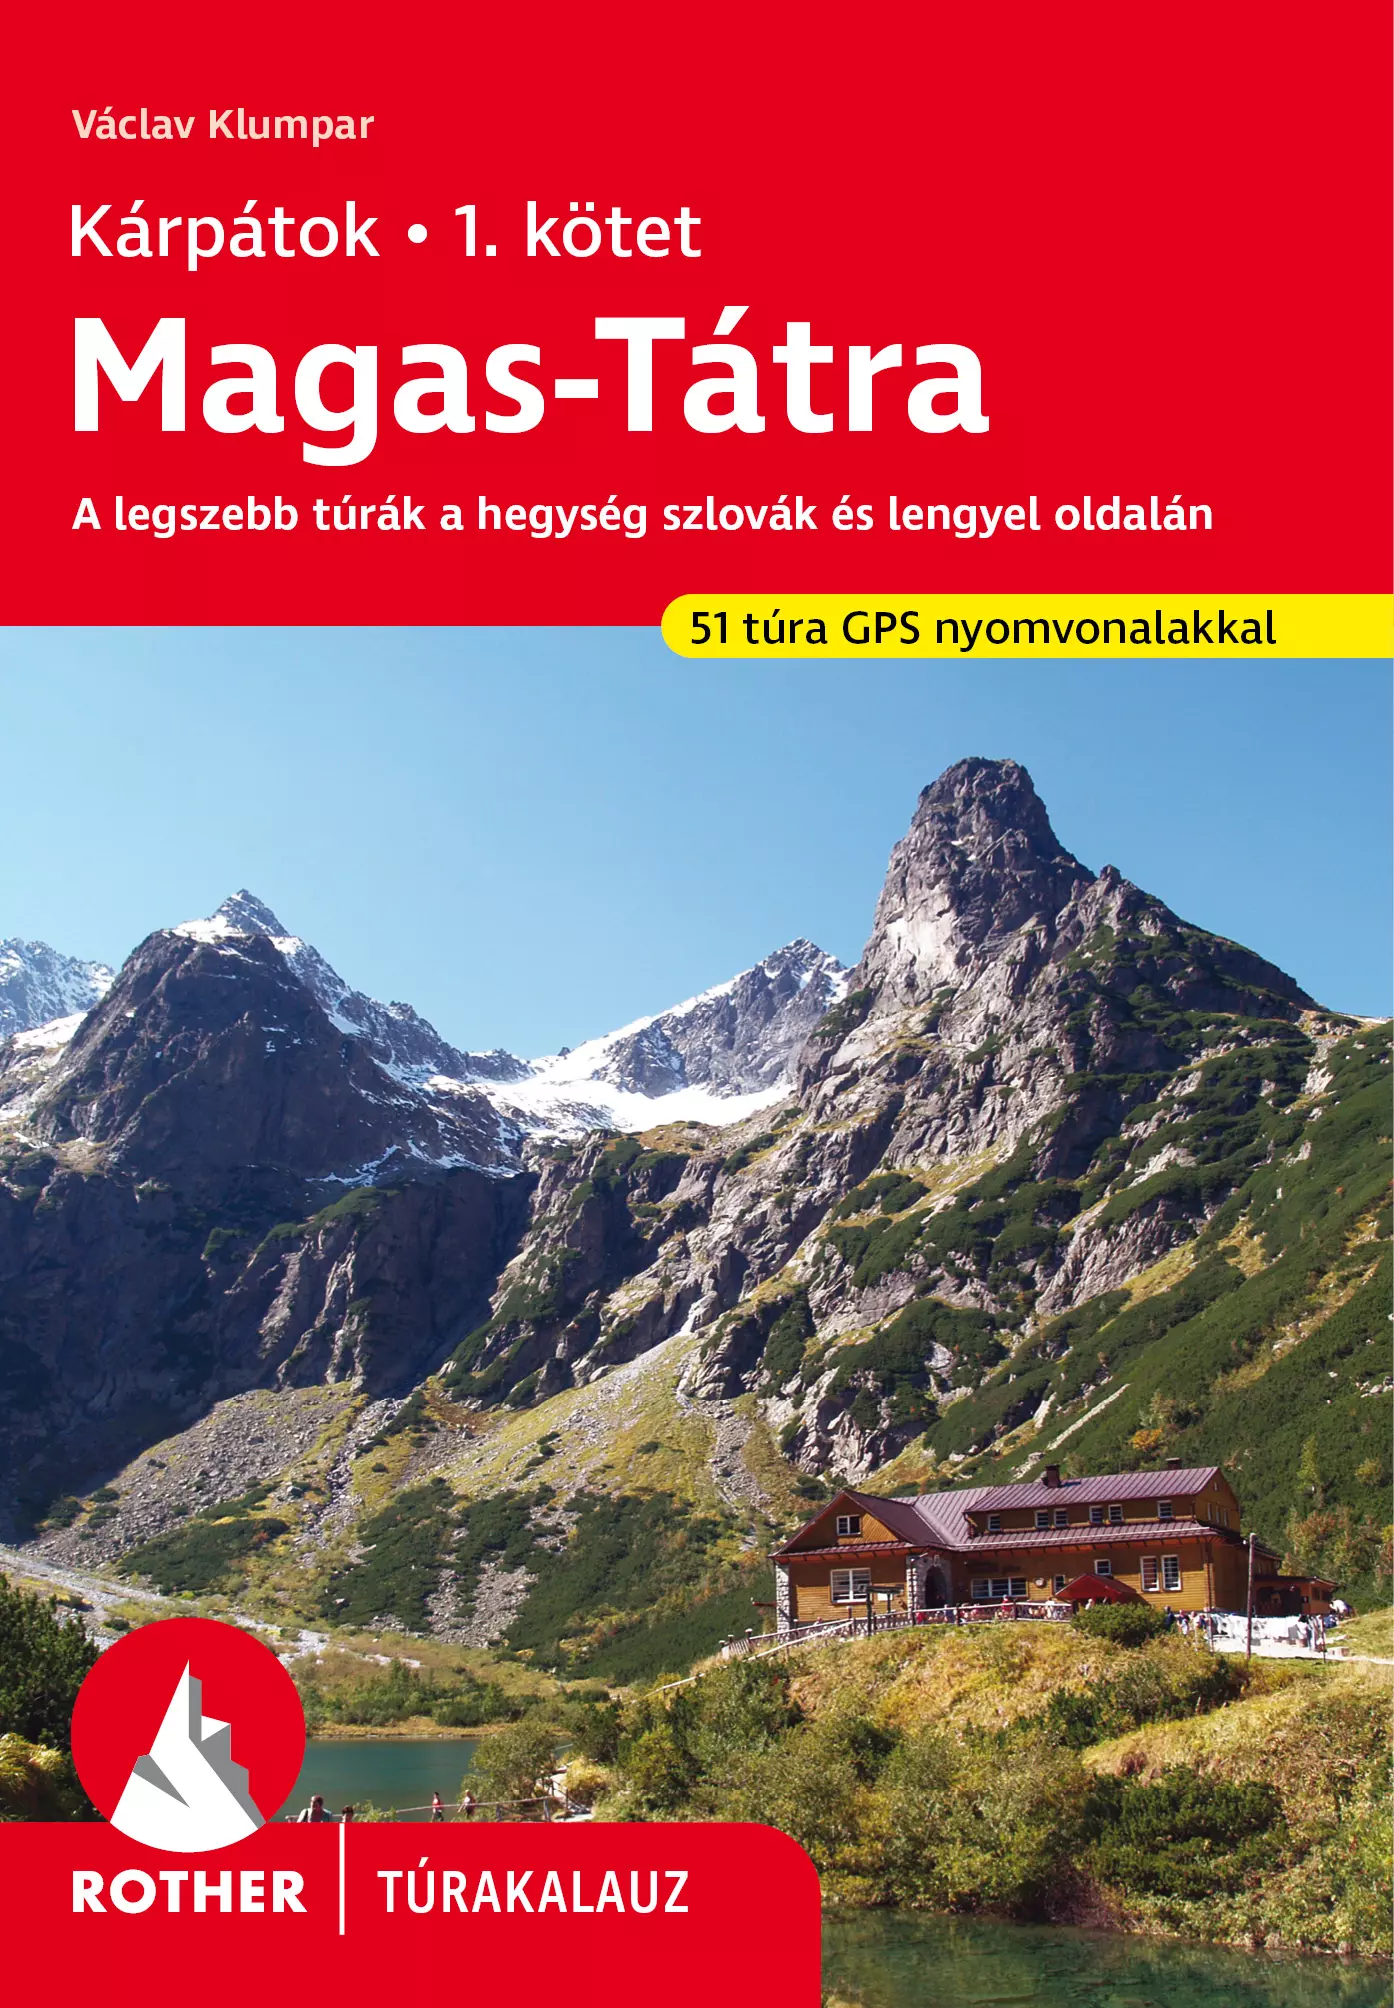 Tatra Inalta ghid turistic (maghiara) - Rother